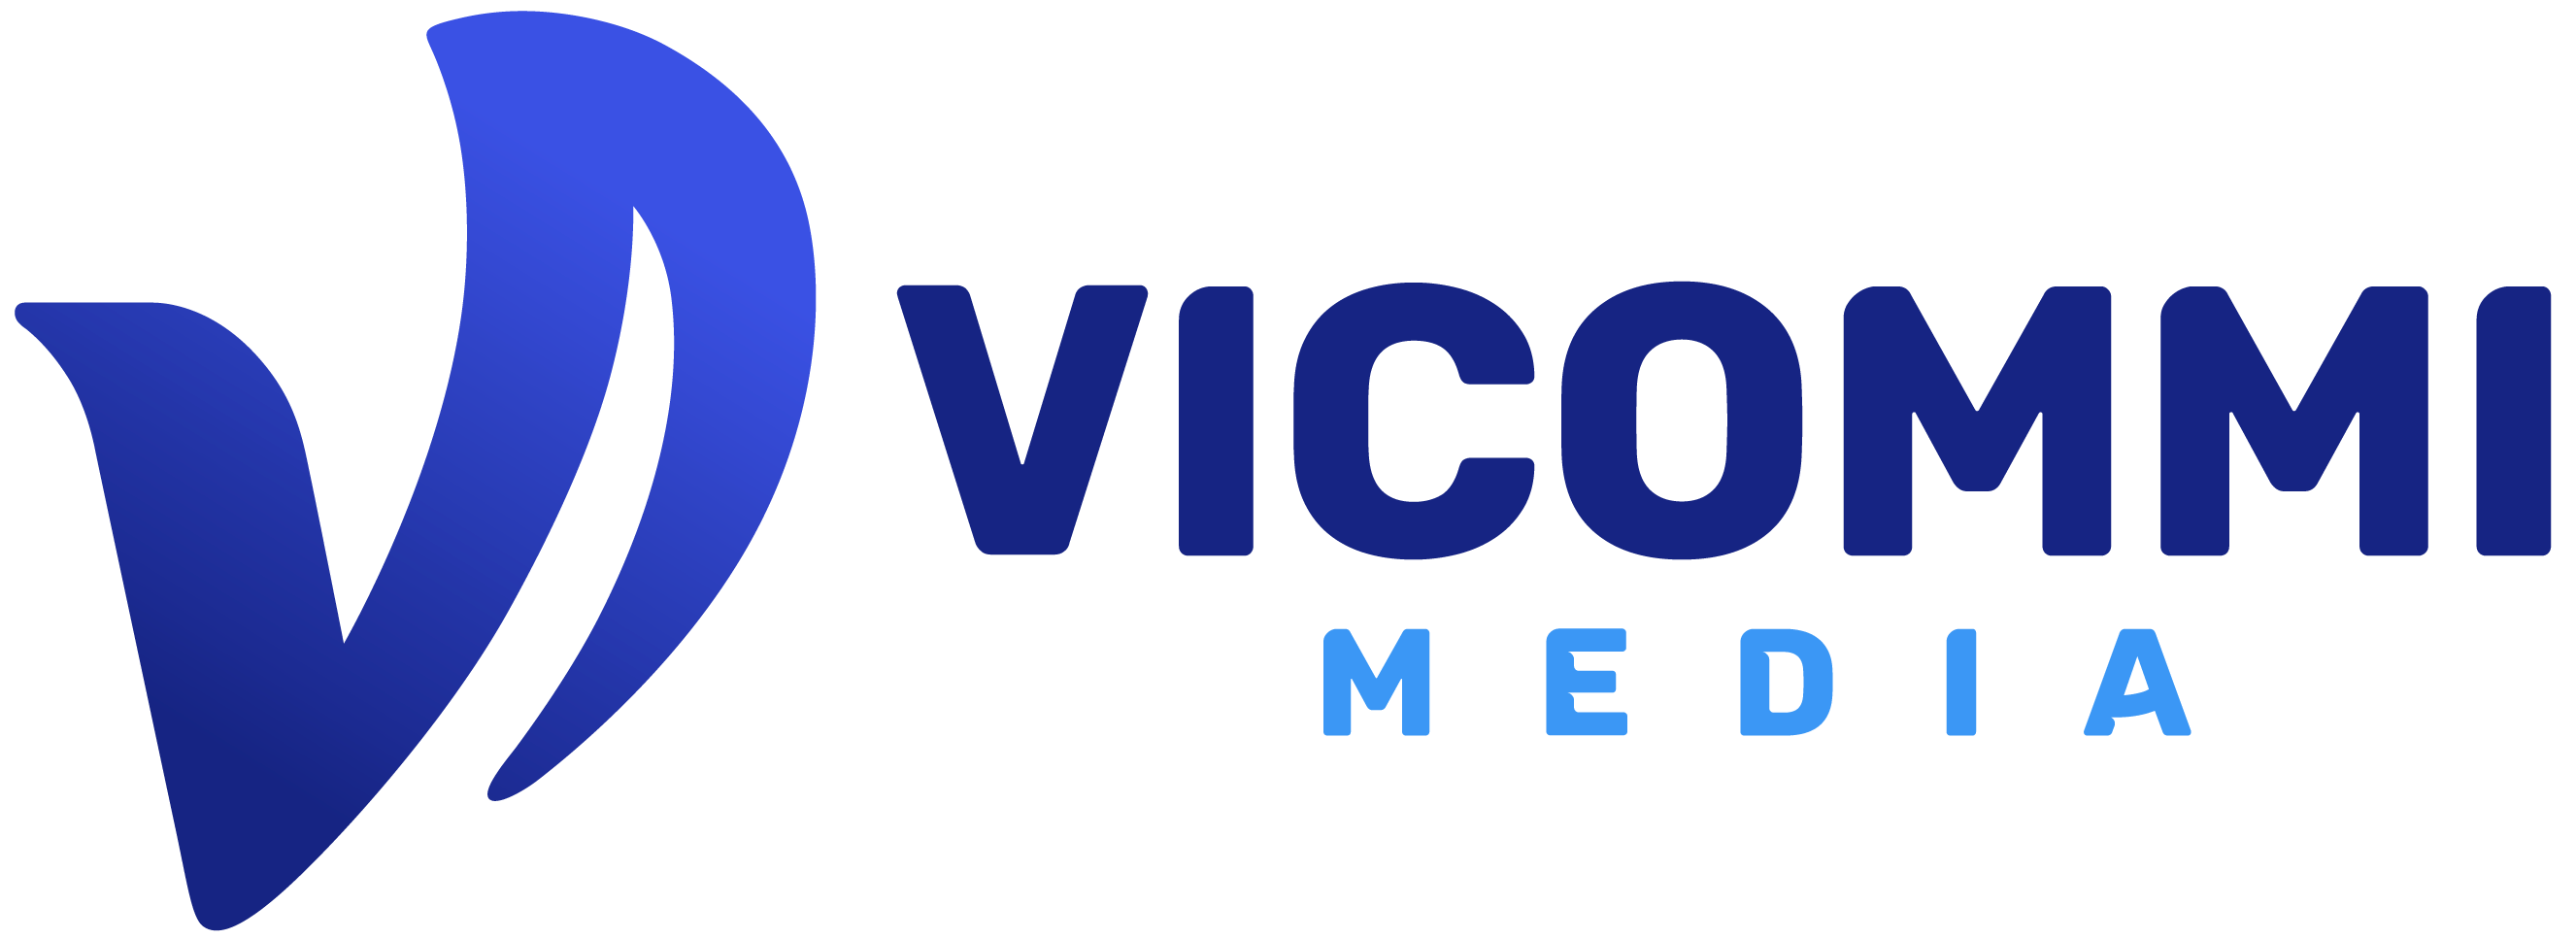 Vicommi Media